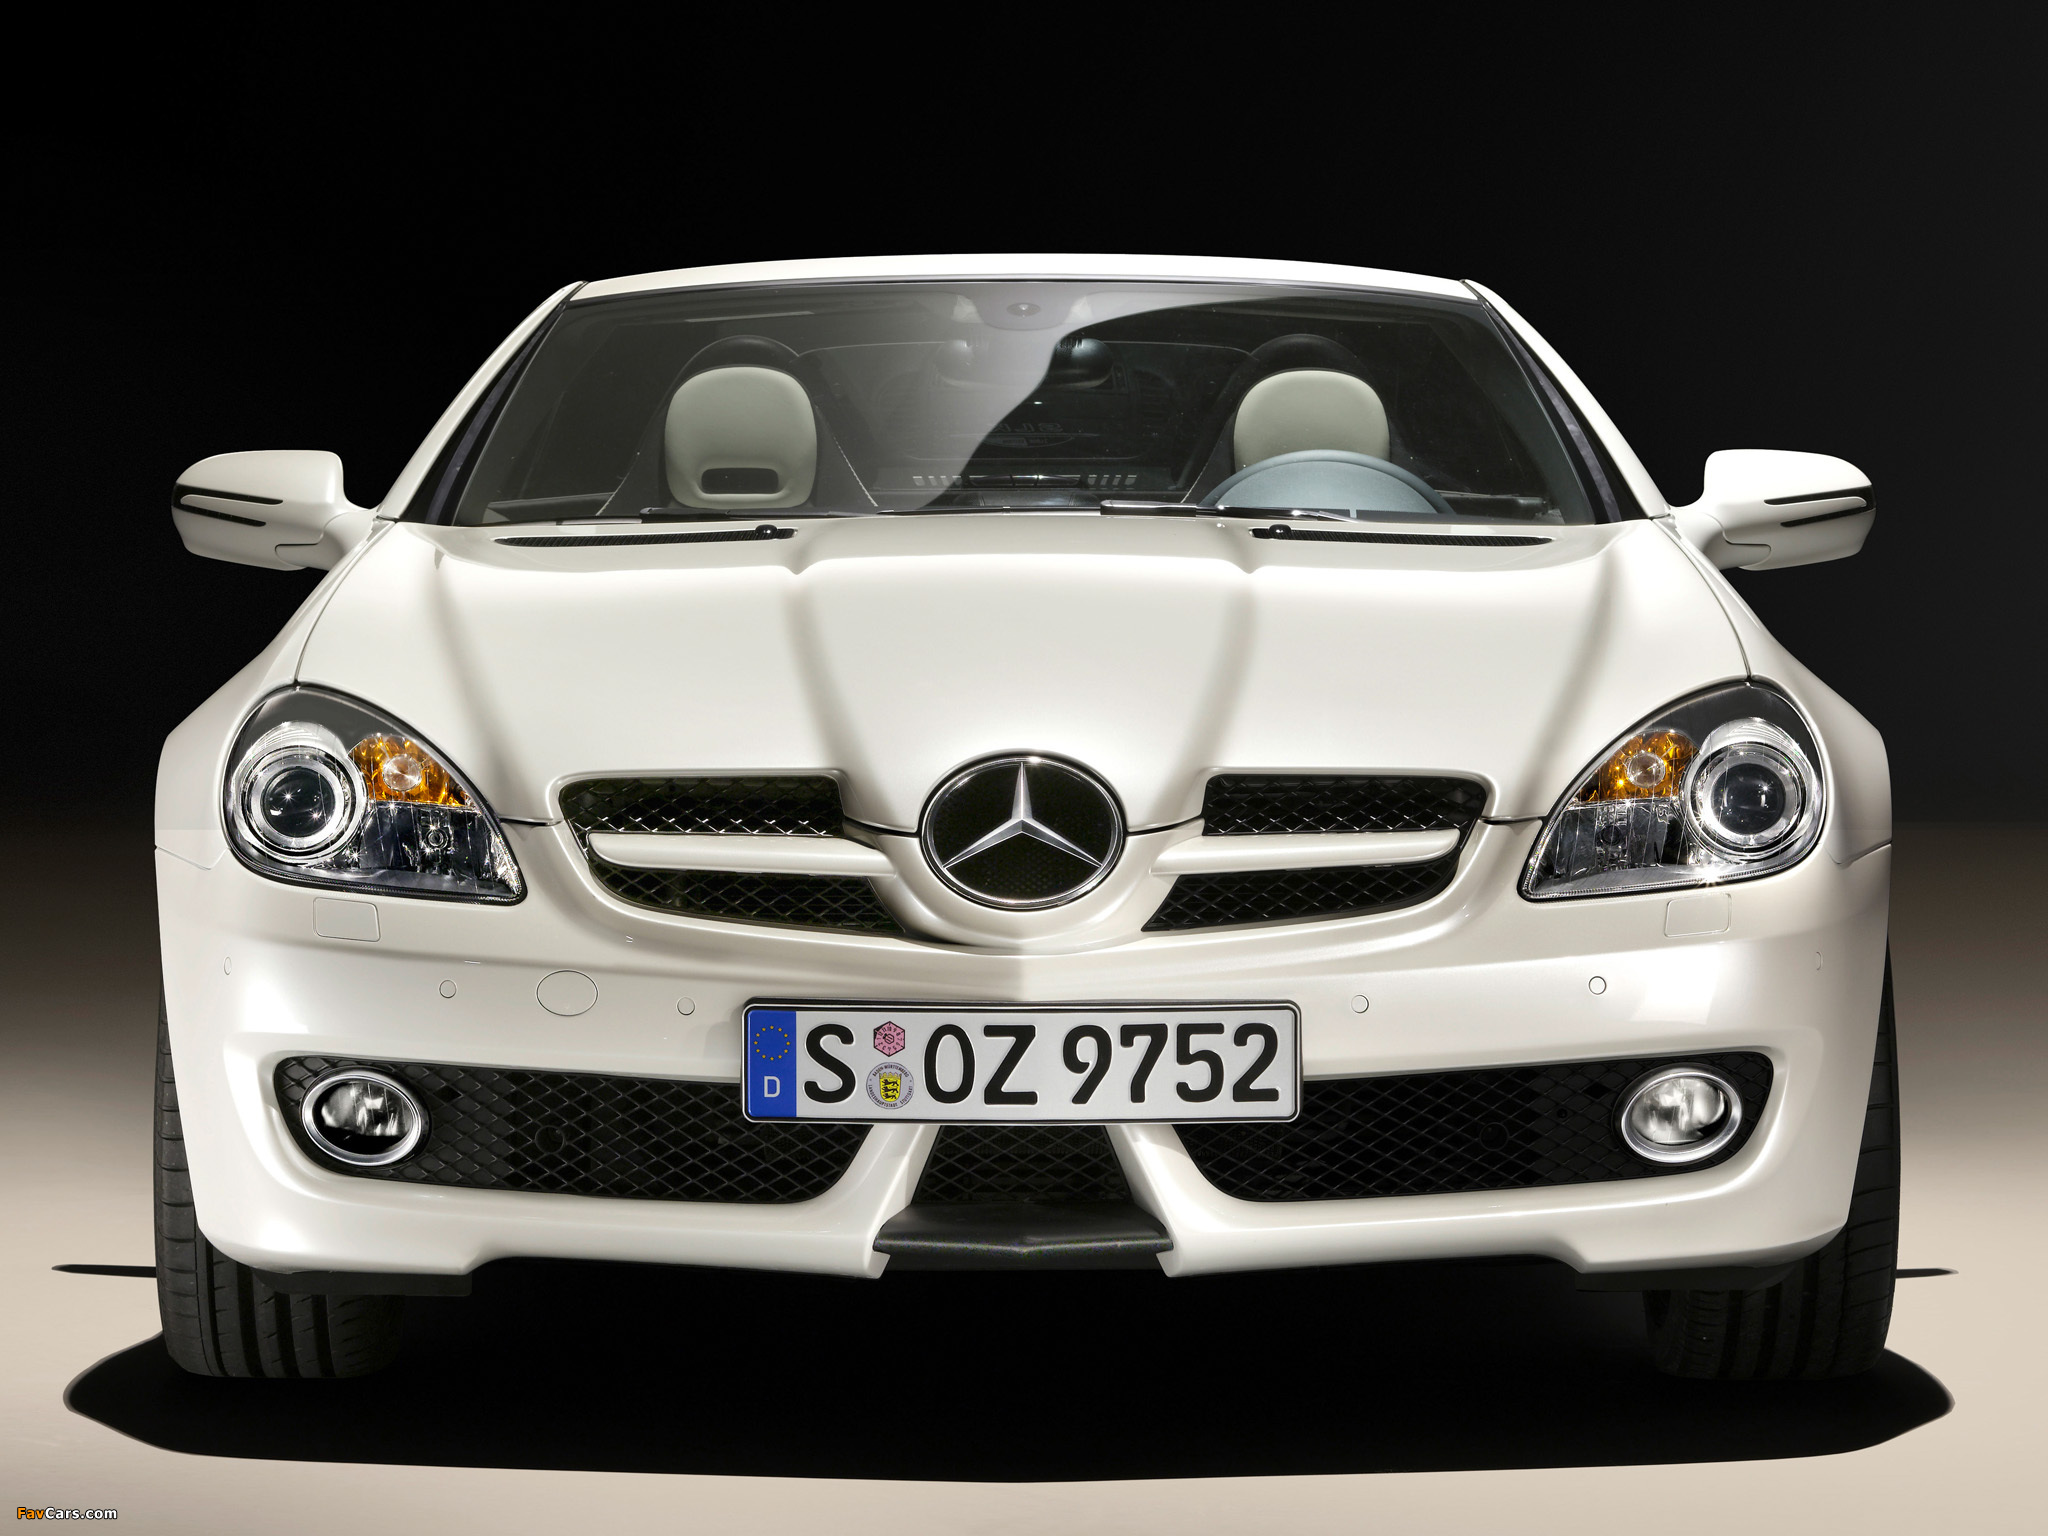 Mercedes-Benz SLK 350 2LOOK Edition (R171) 2009 photos (2048 x 1536)